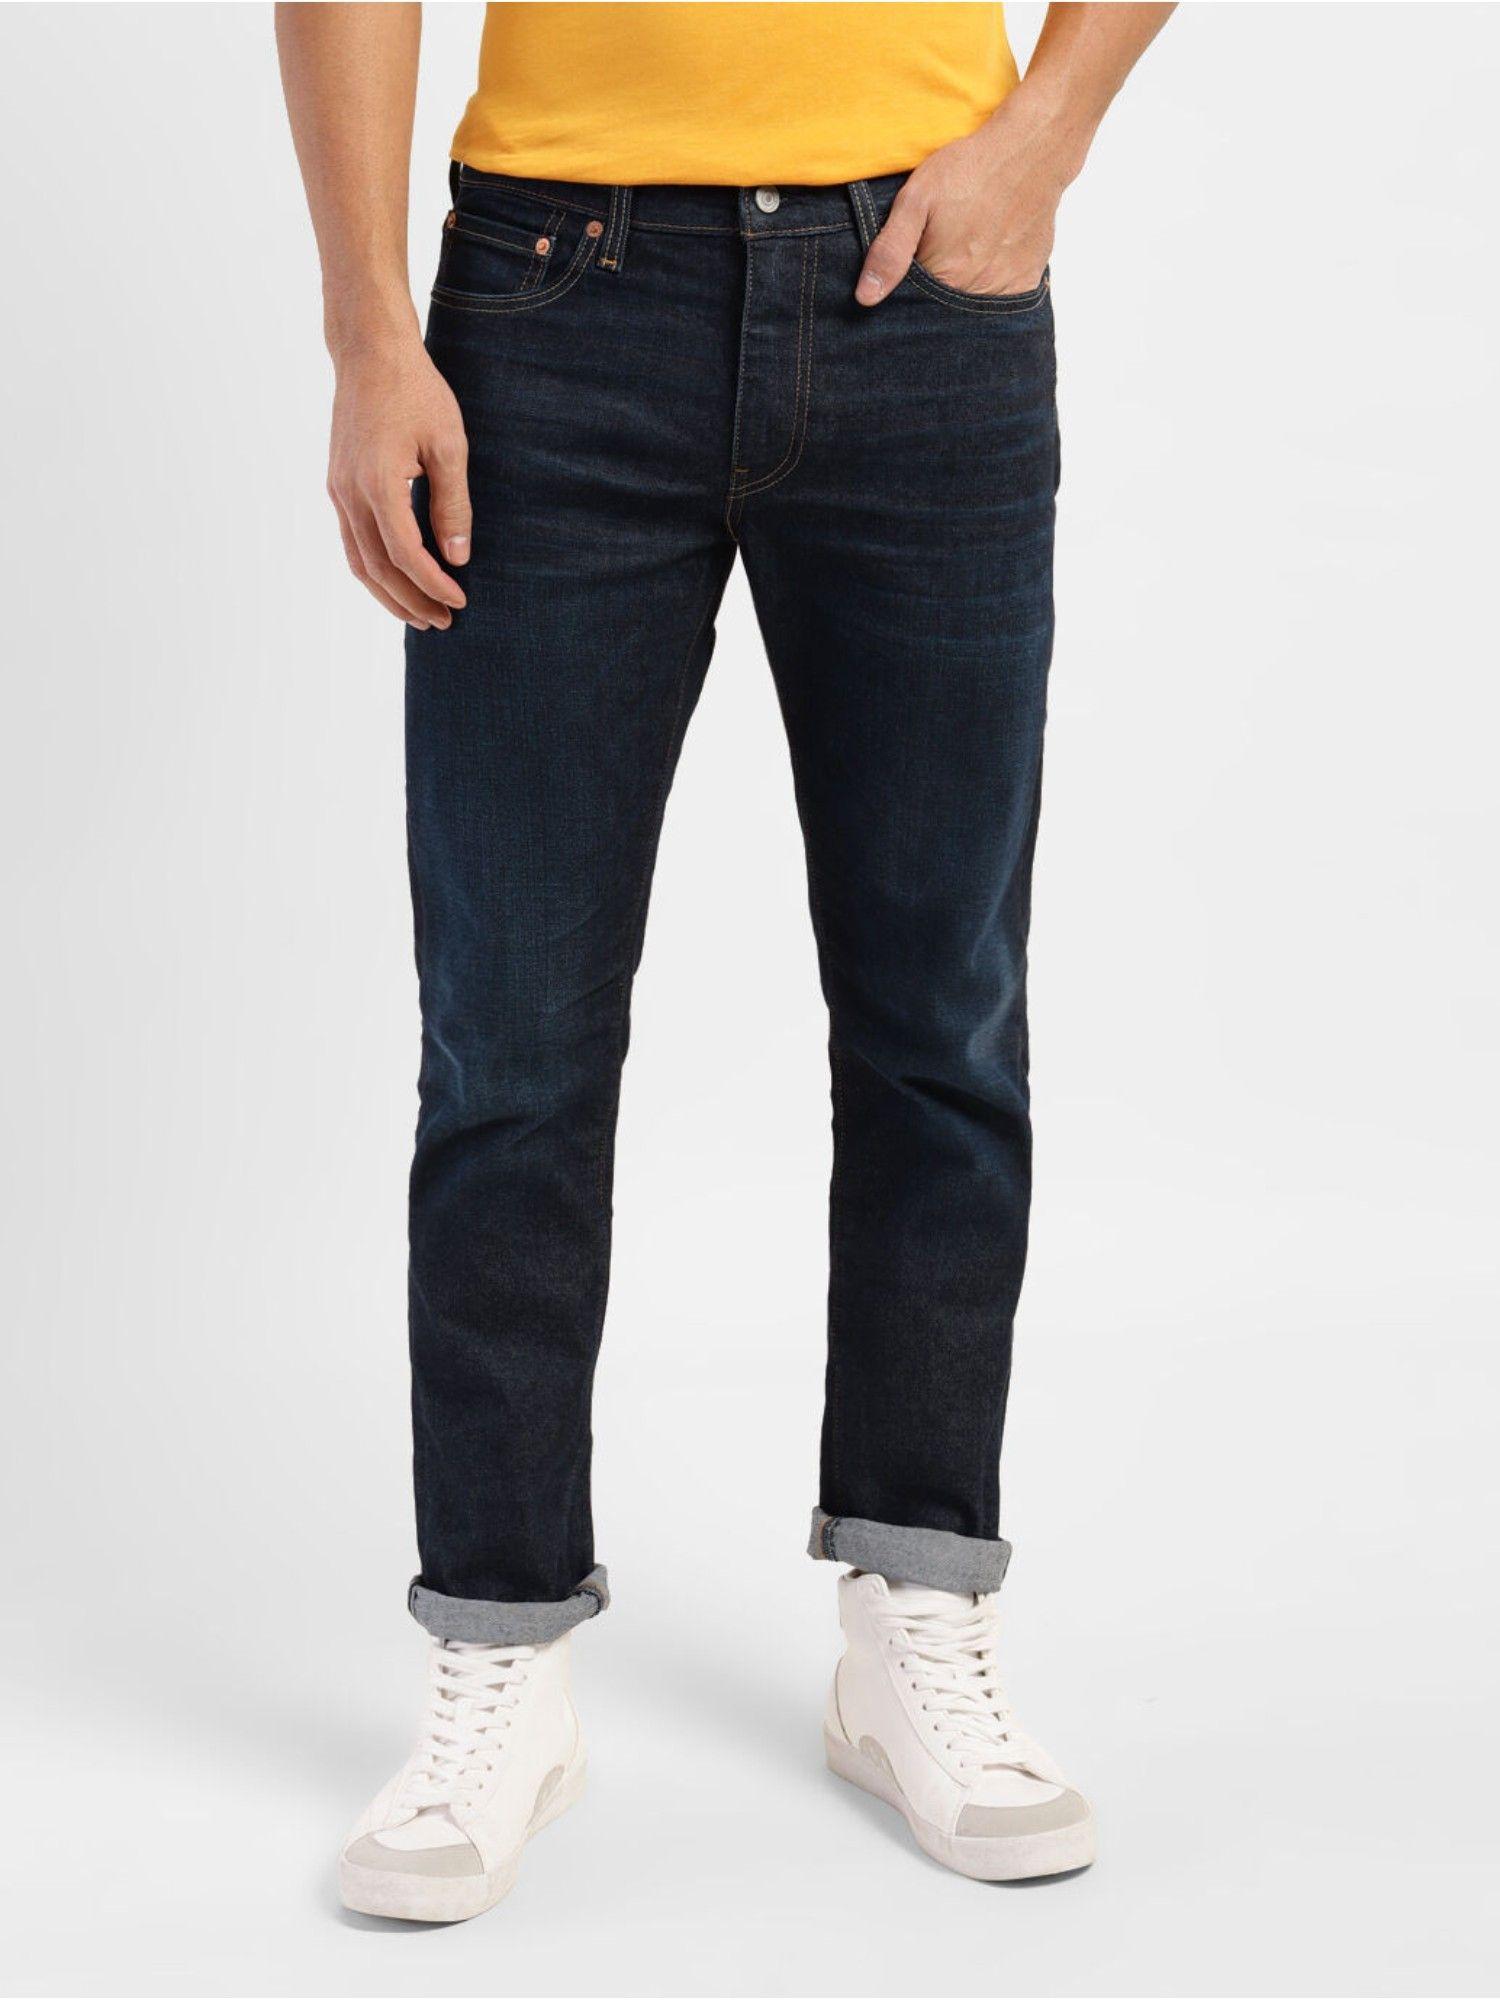 Mens 511 Blue Slim Fit Jeans